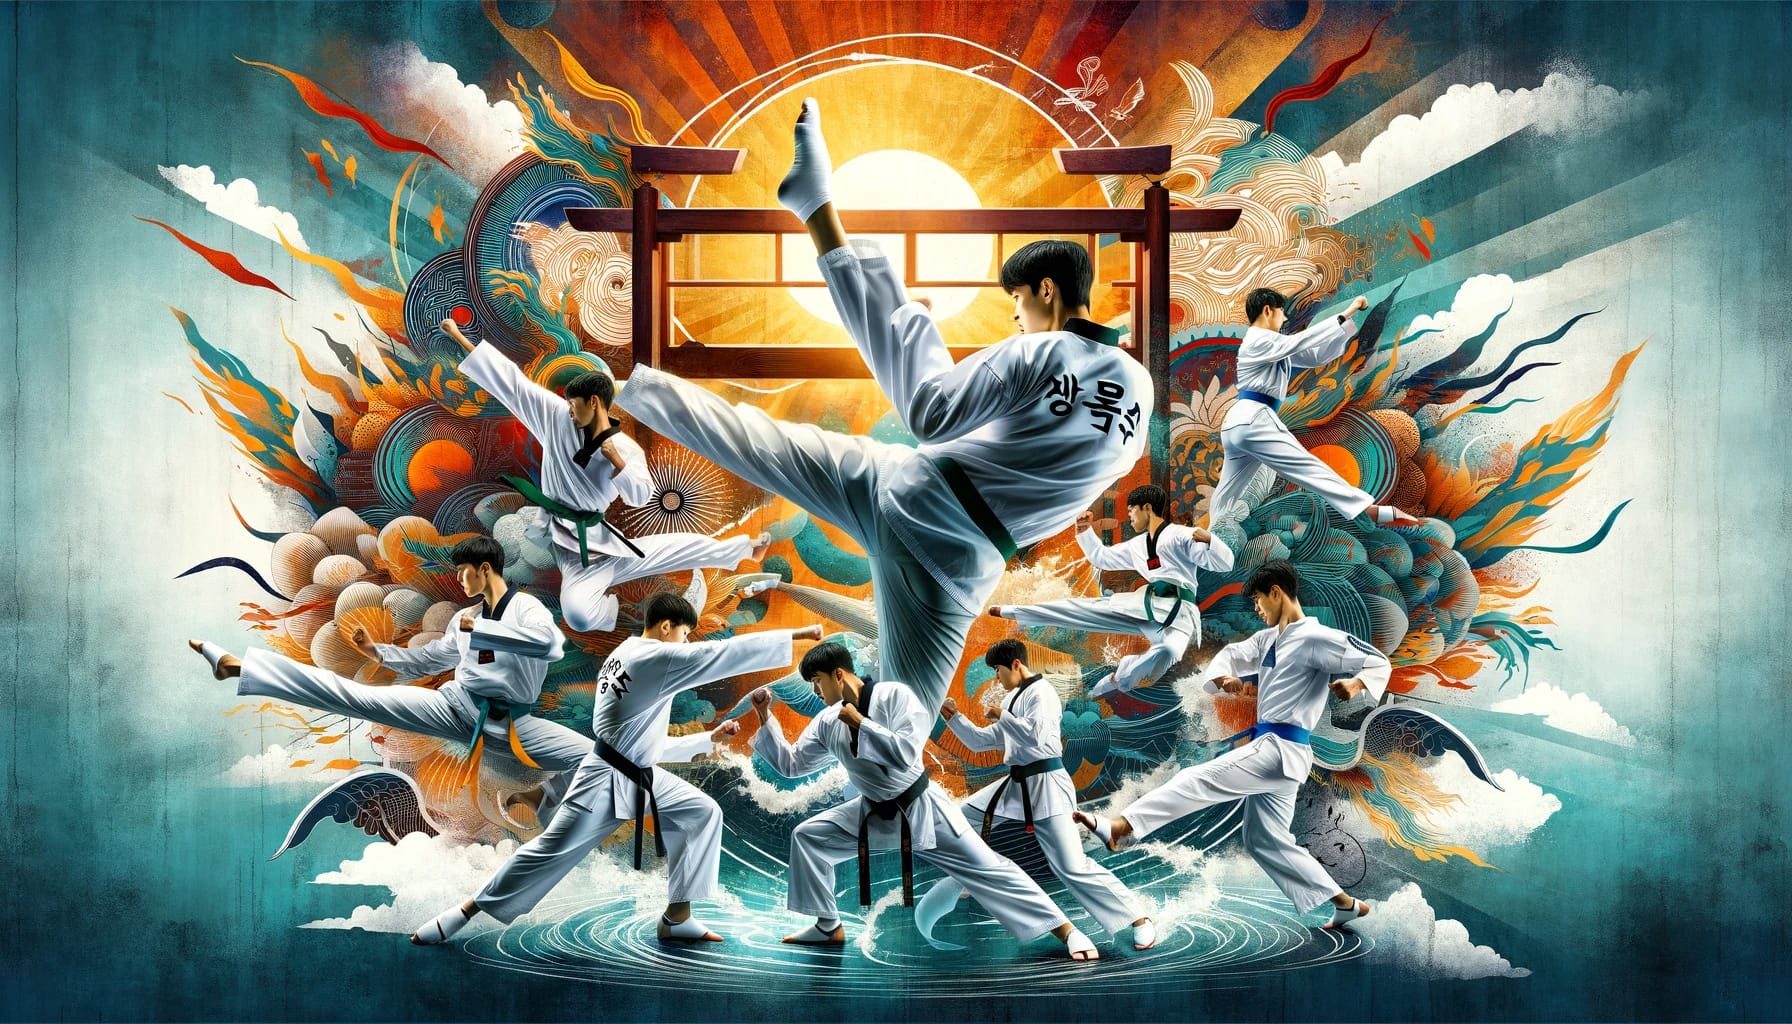 Taekwondo Kicks - Collage of Taekwondo Techniques with Traditional Korean Artistry